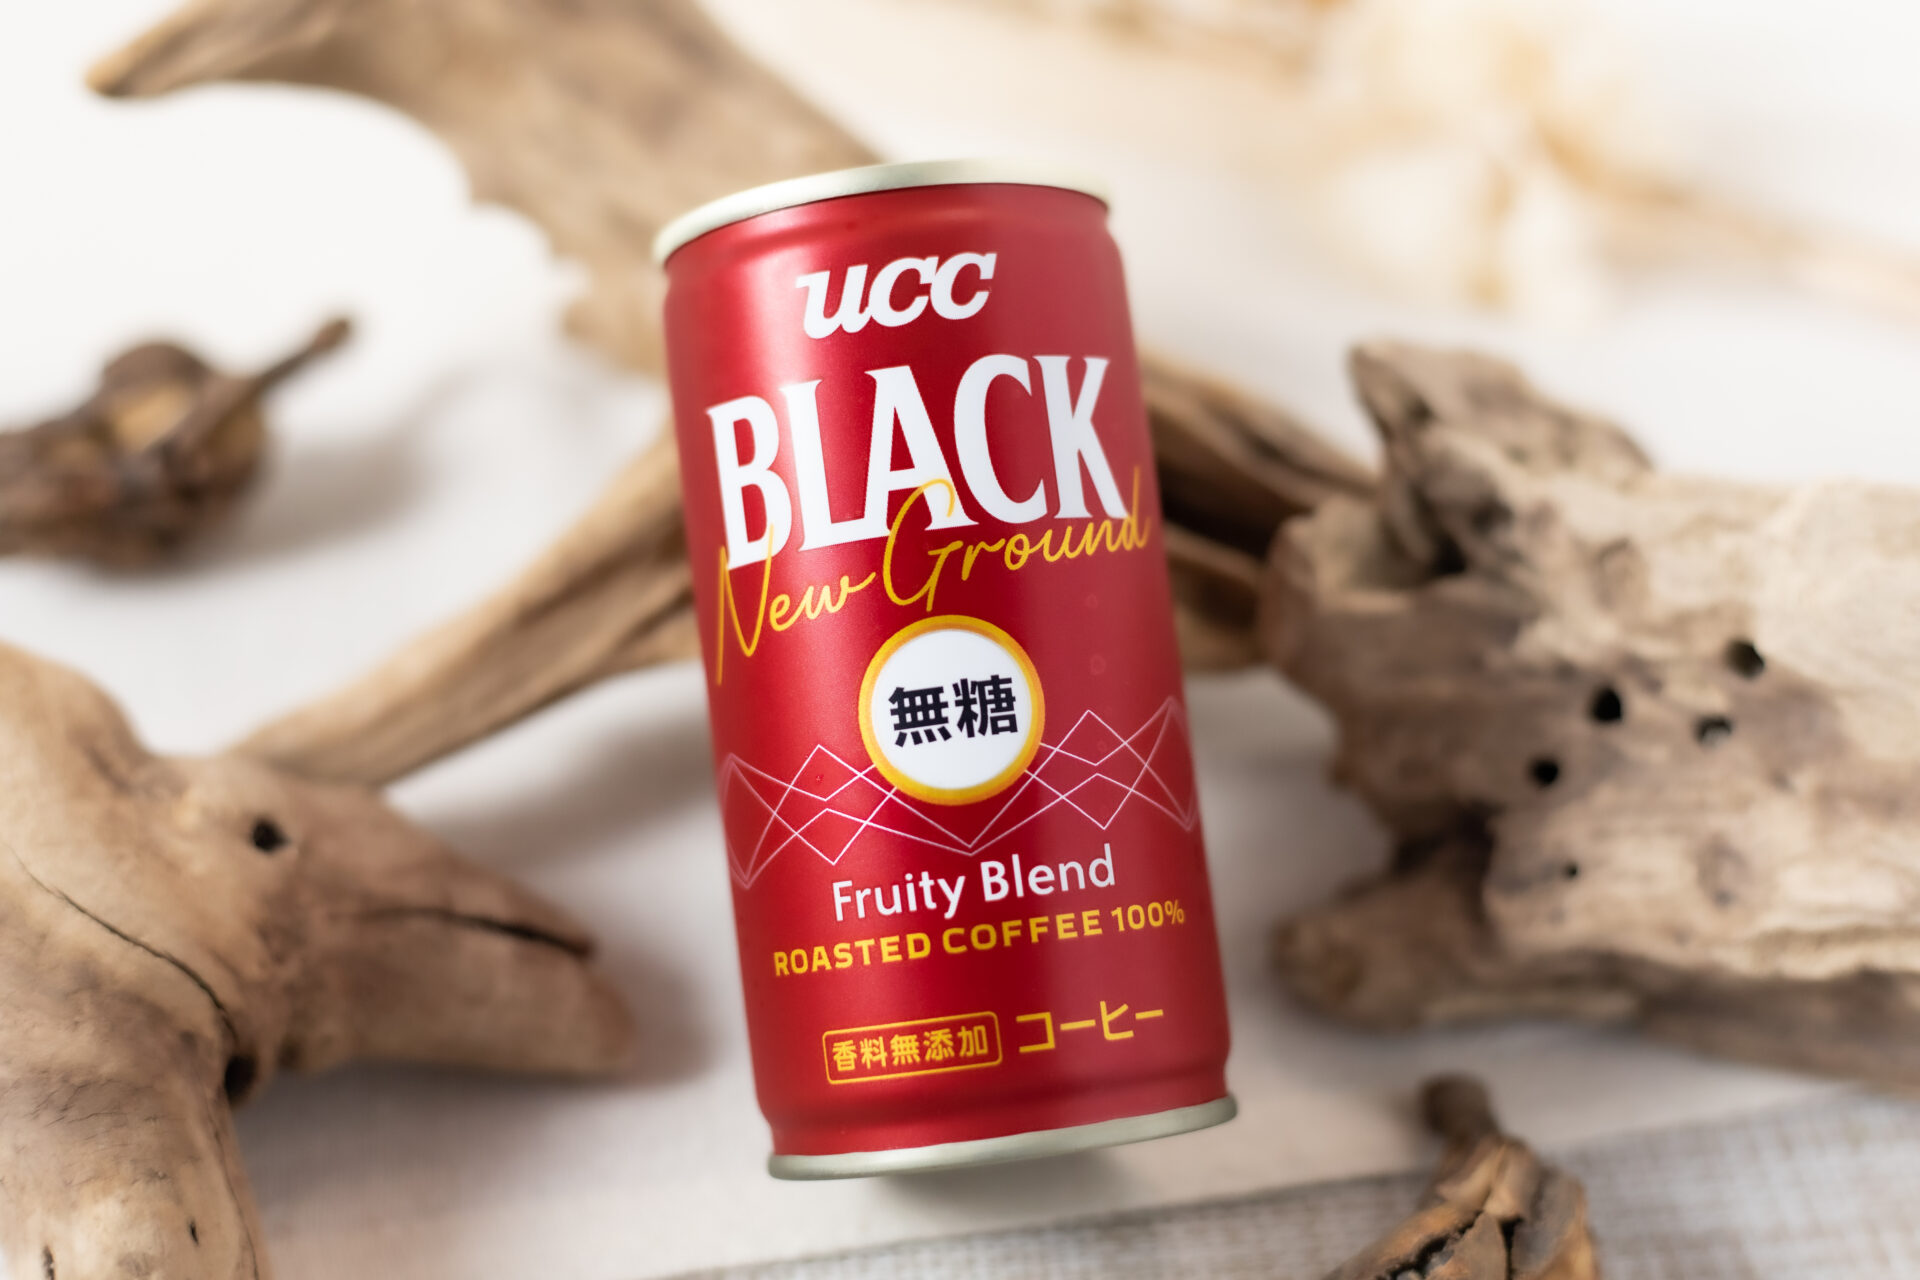 UCC『BLACK無糖 New Ground Fruity Blend 缶 185g』